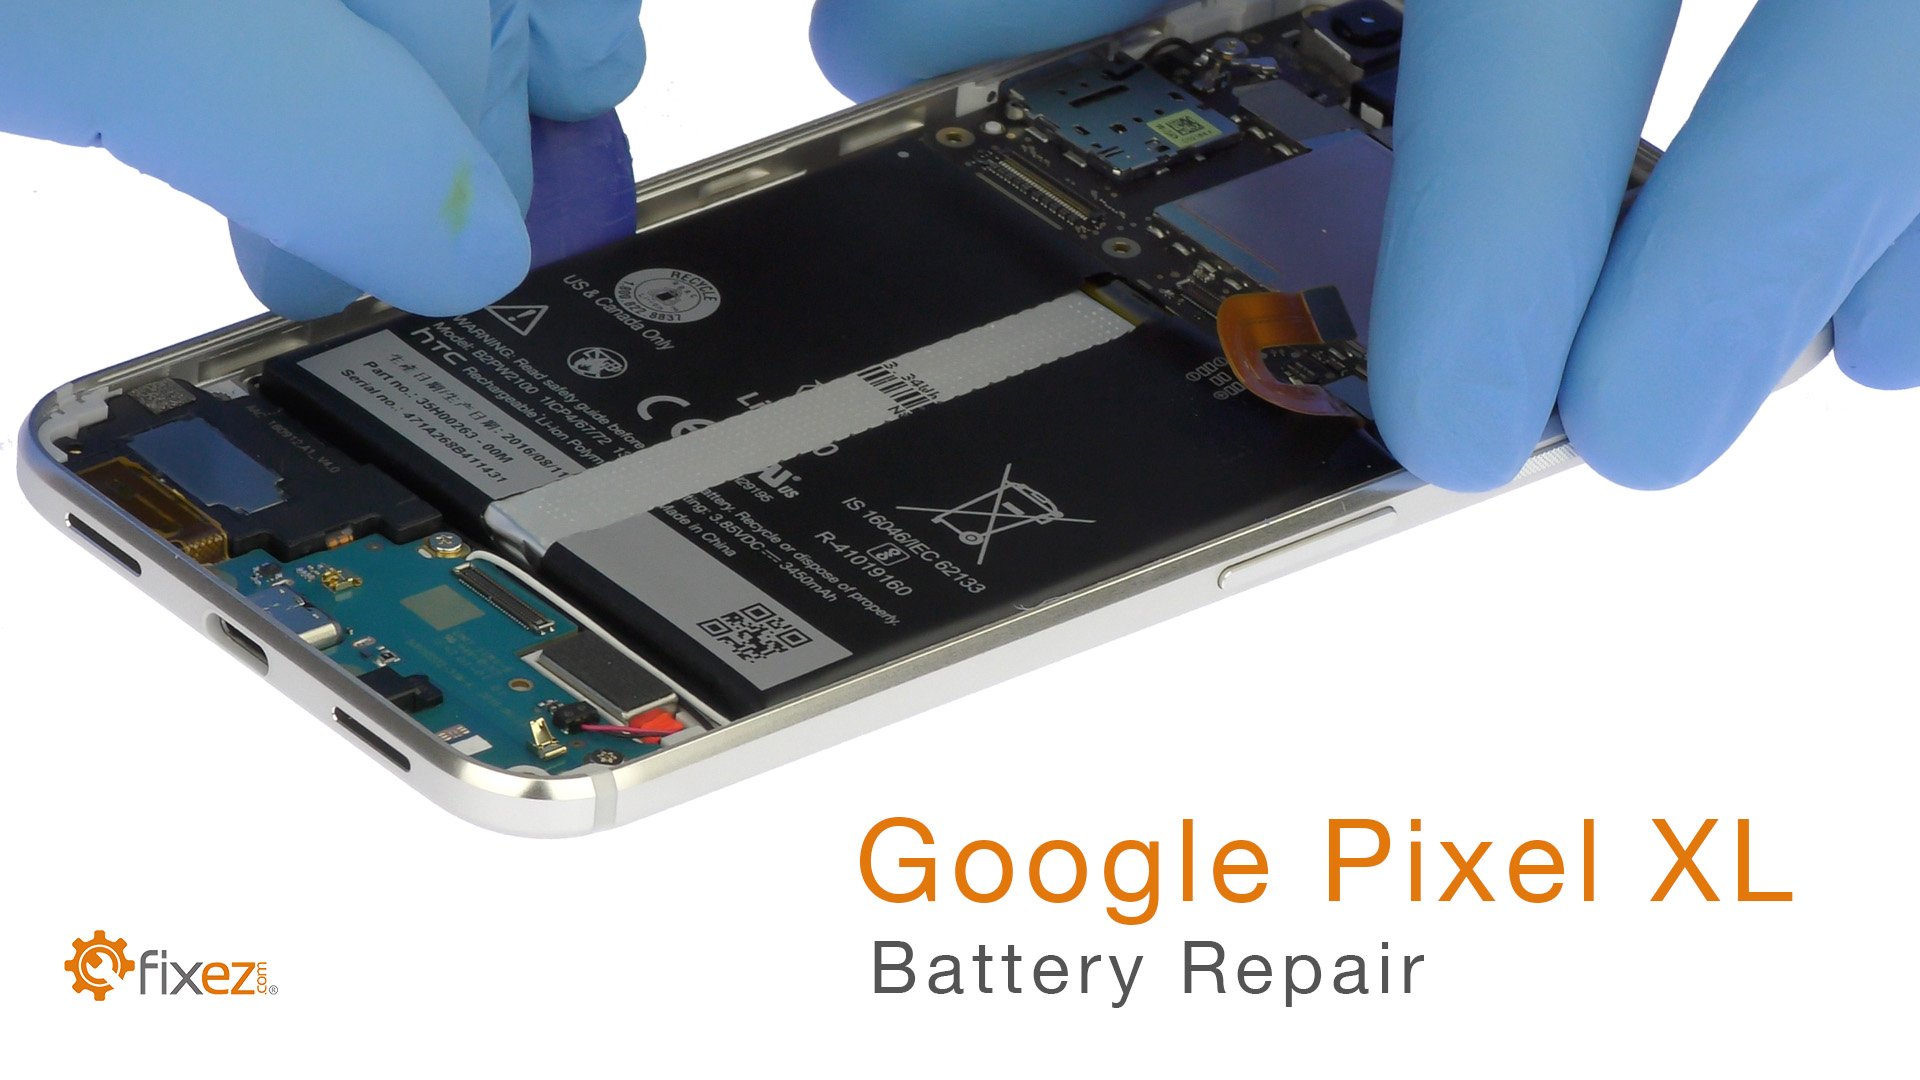 Google Pixel XL Battery Repair